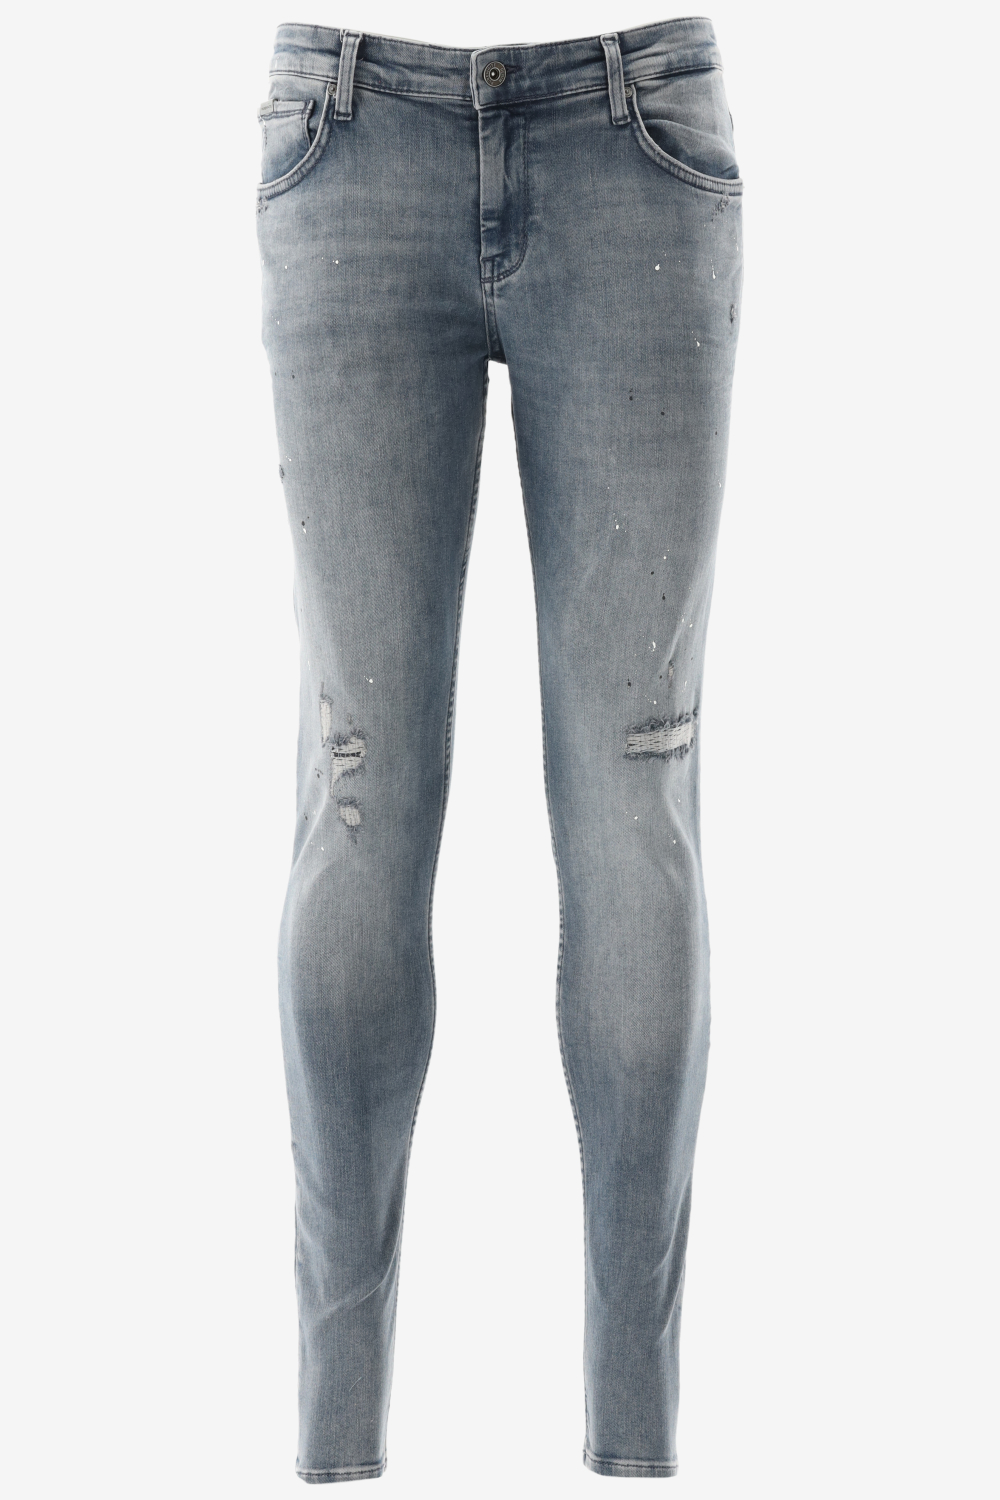 Purewhite - Dylan Painted Super Heren Skinny Fit Jeans - Blauw - Maat 36